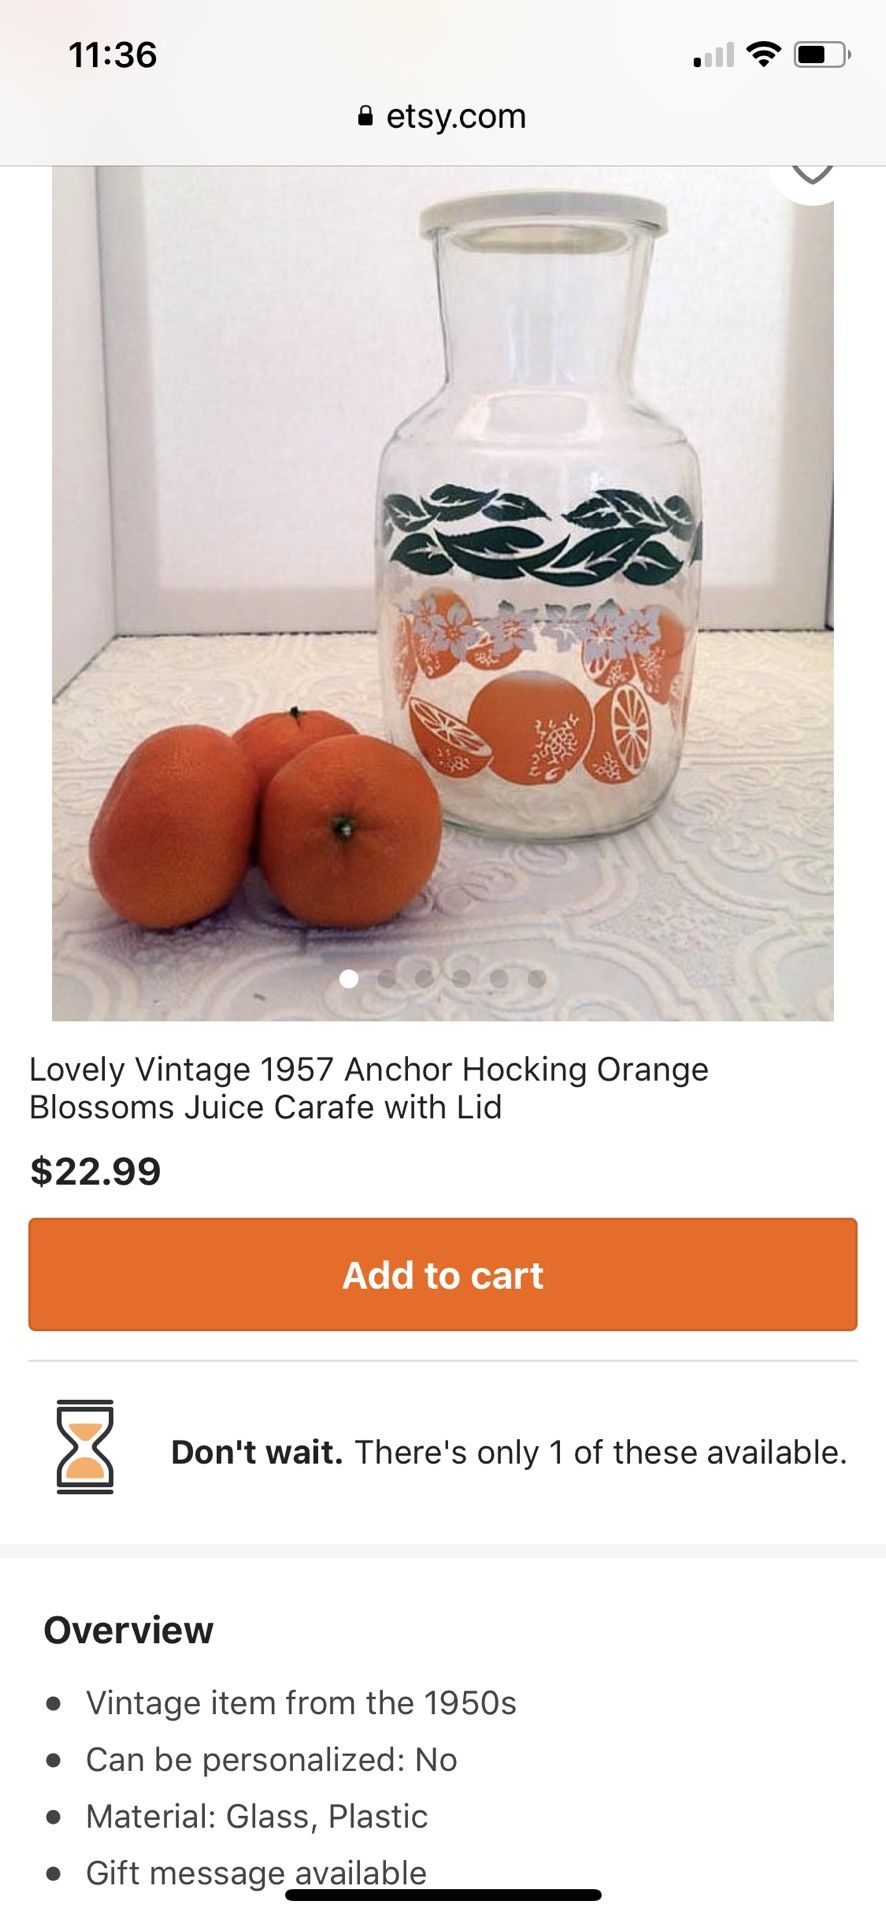 Orange Juice Carafe with Lid, Anchor Hocking, 1950s